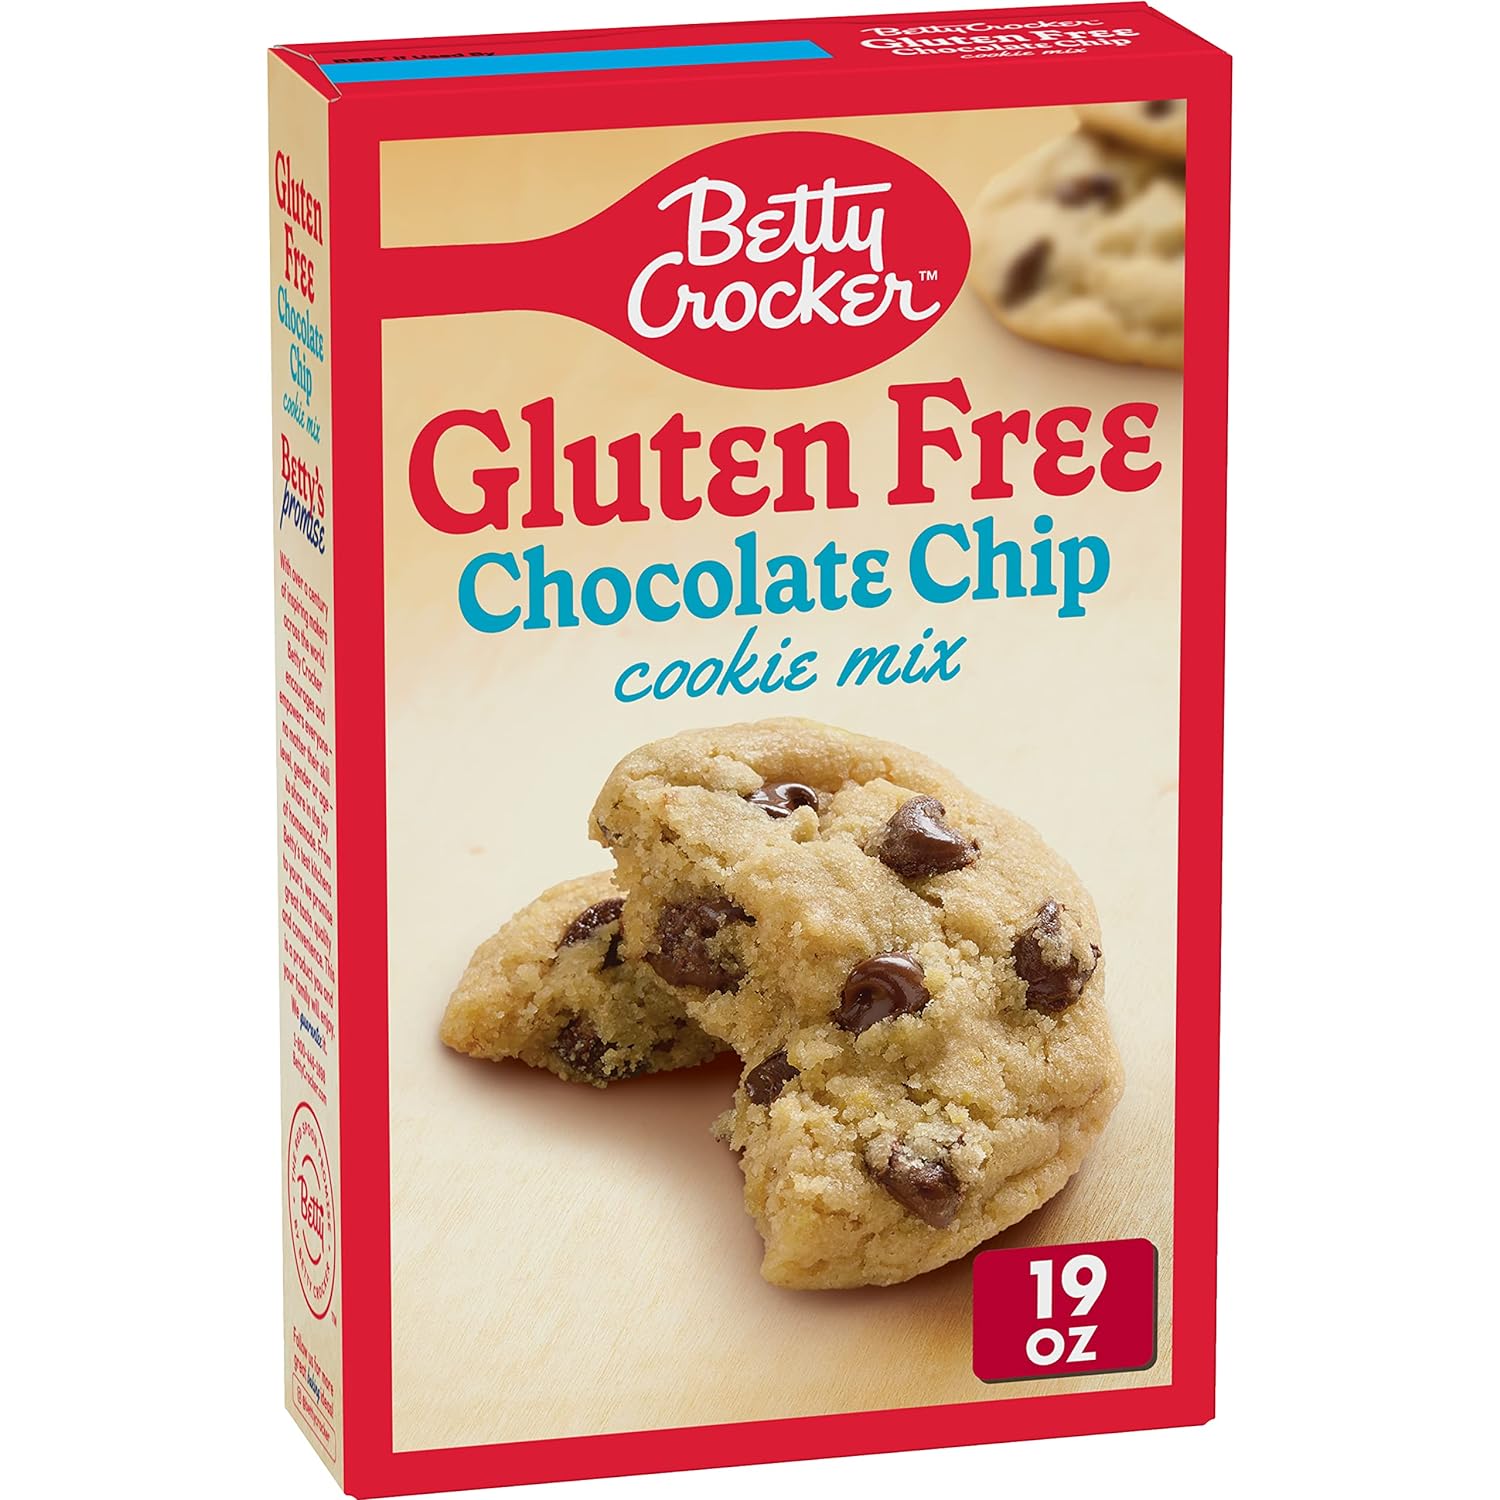 Betty Crocker Gluten Free Chocolate Chip Cookie Mix, 19 oz